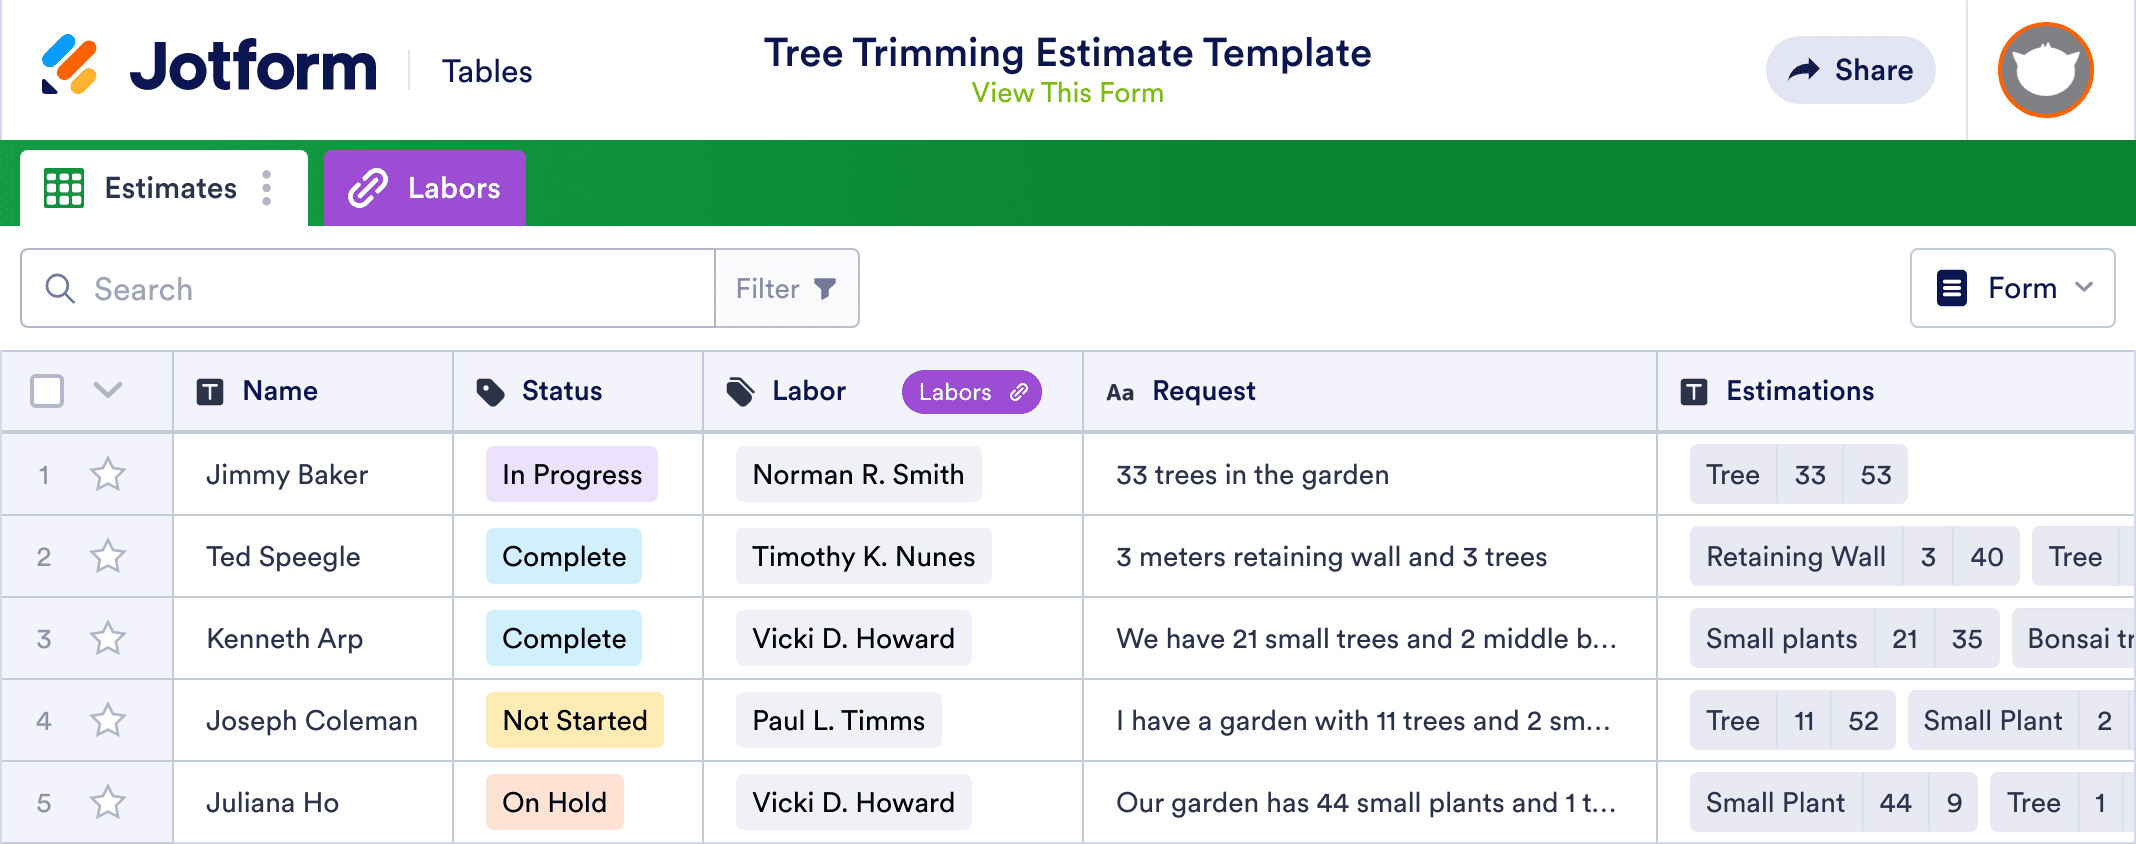 Tree Trimming Estimate Template | Jotform Tables